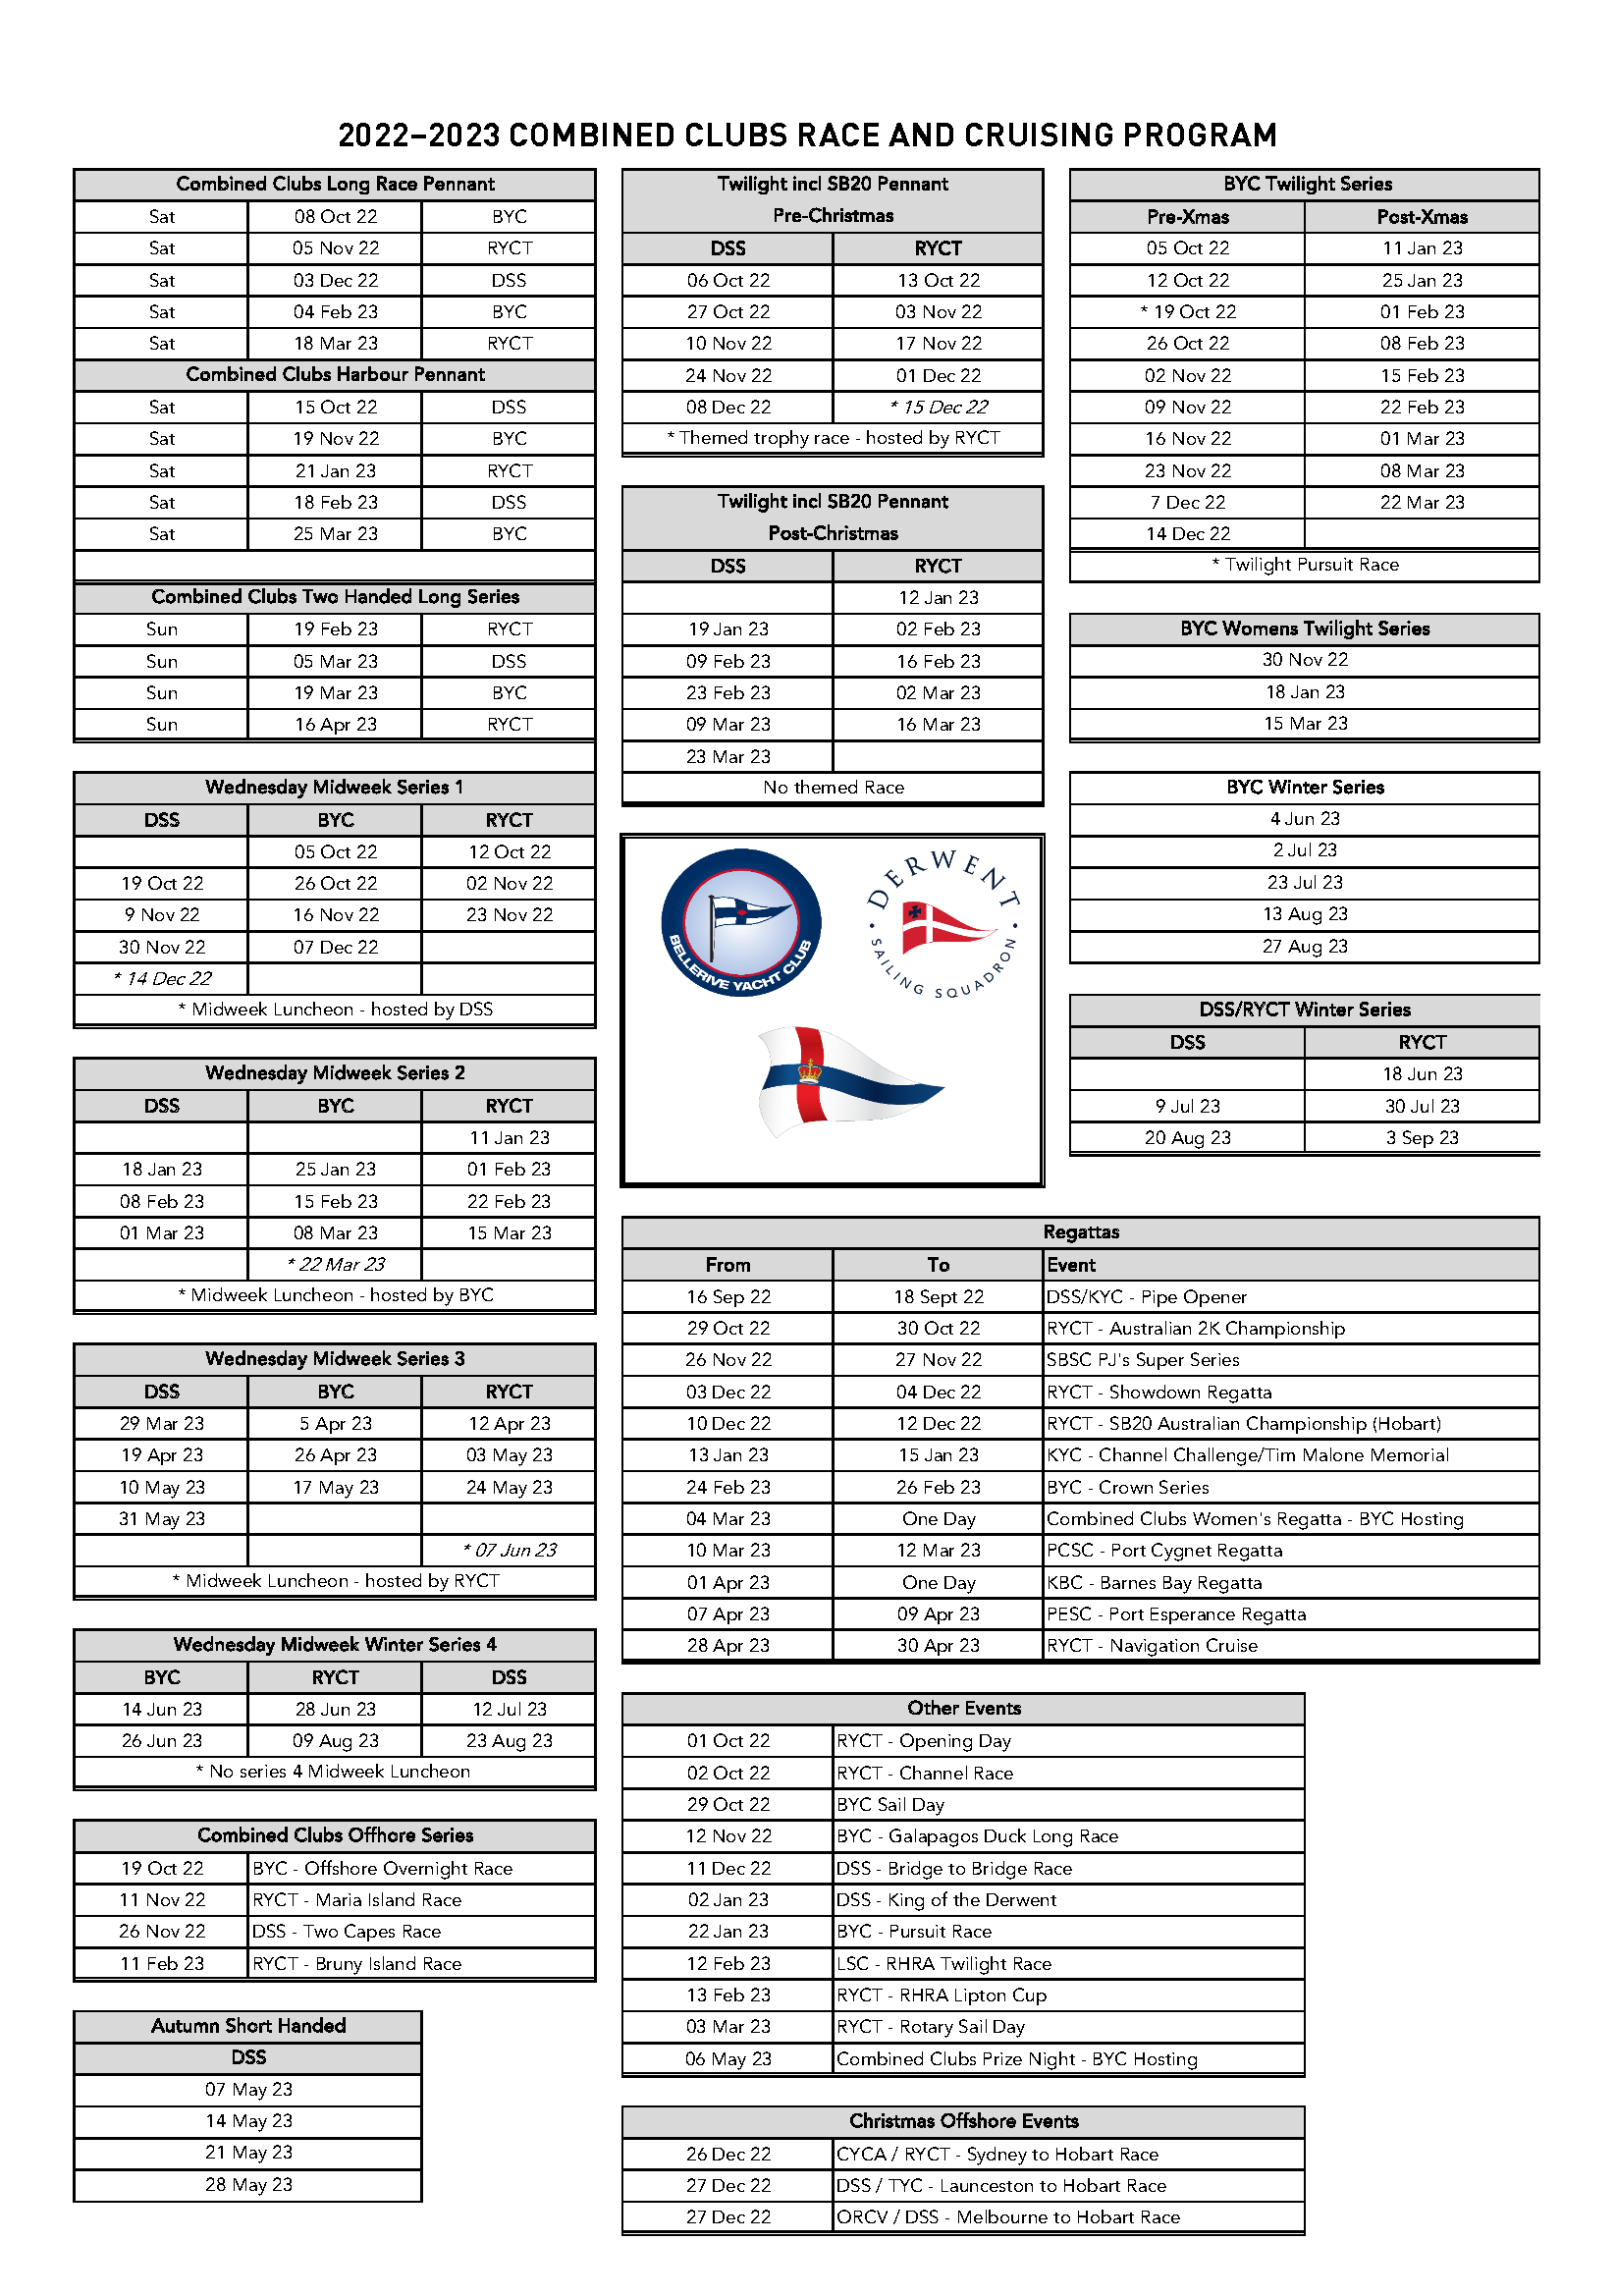 2022-23 Combined Clubs Calendar